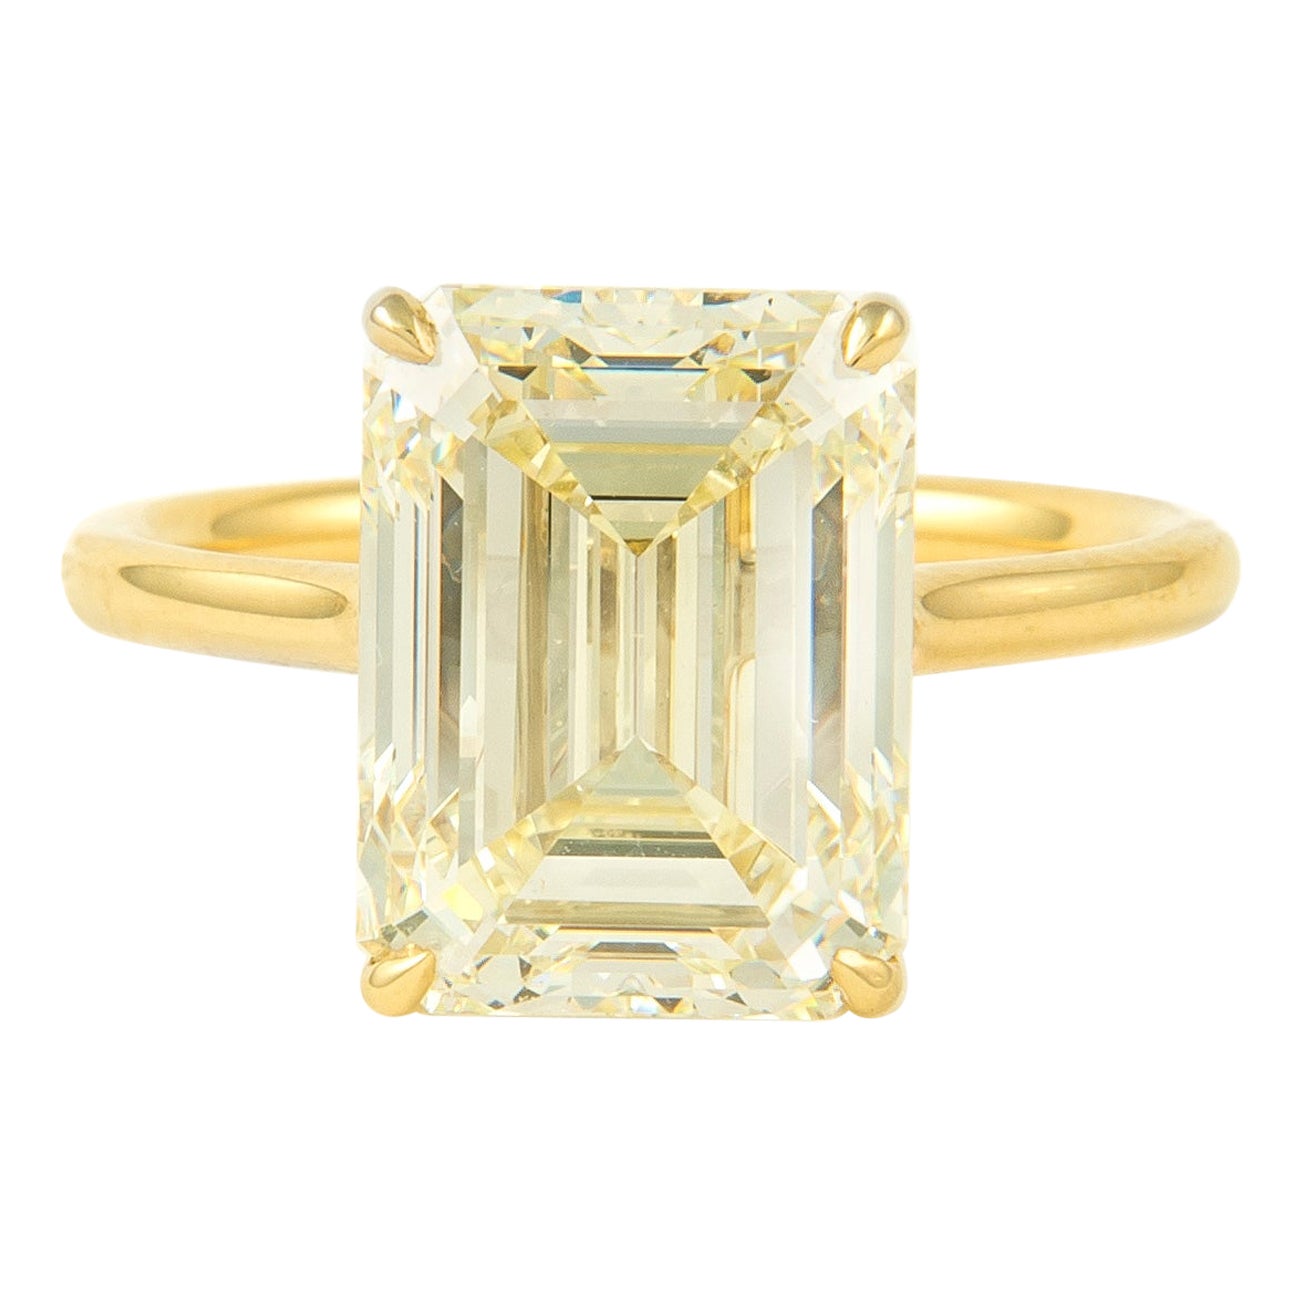 Alexander HRD 6.02 Carat Emerald Cut Diamond Solitaire Ring 18k Yellow Gold